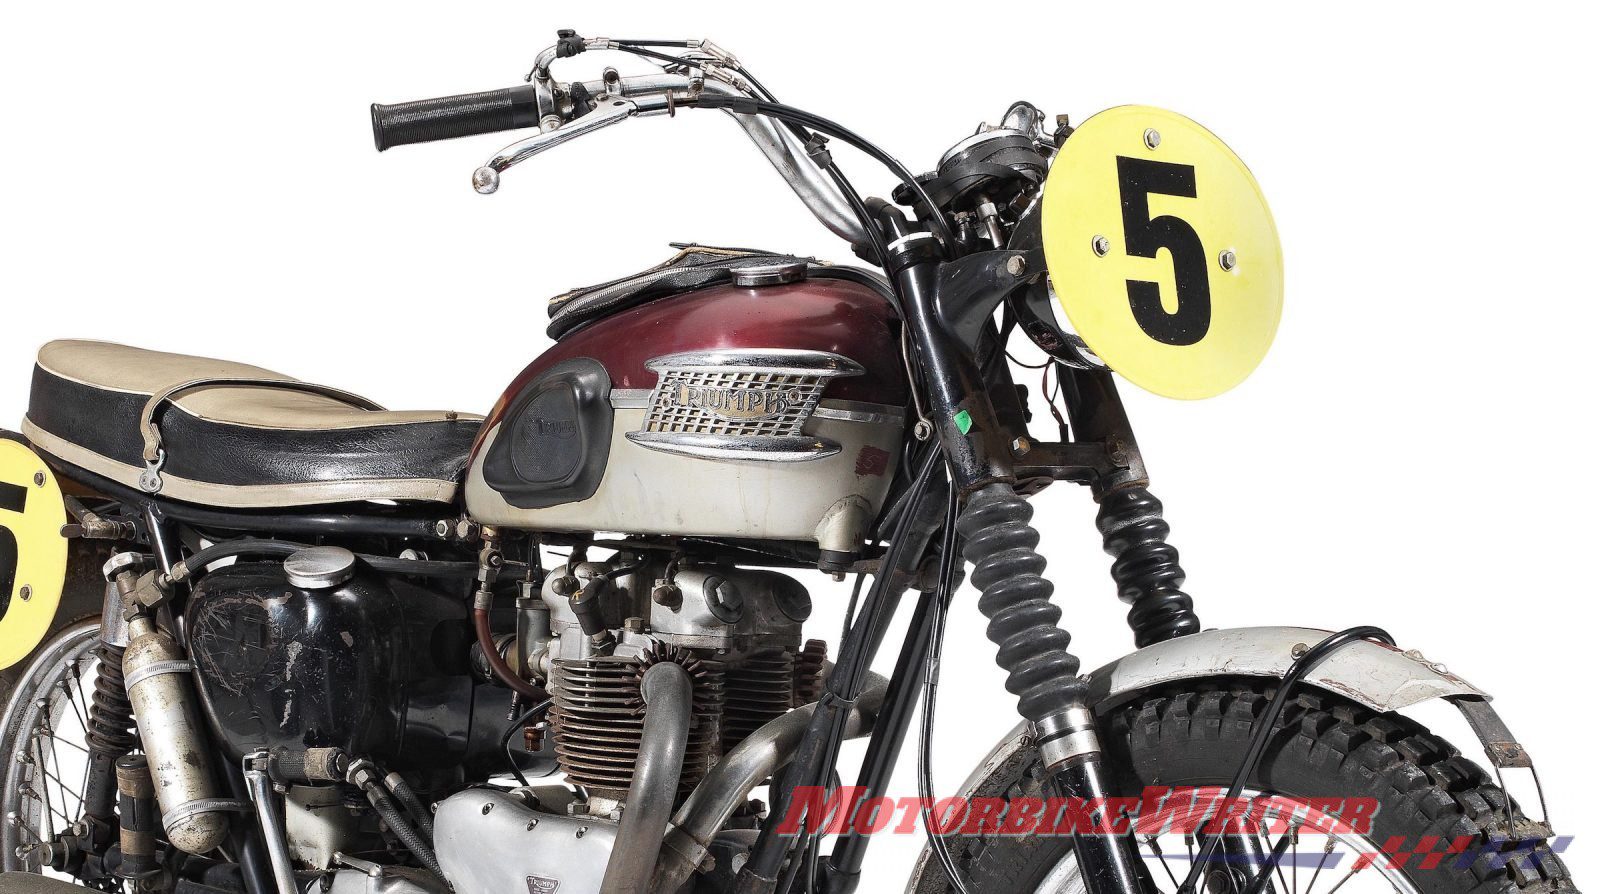 Bud Ekins Great Escape Steve McQuun desert sled triumph motorcycles TR6 record auction